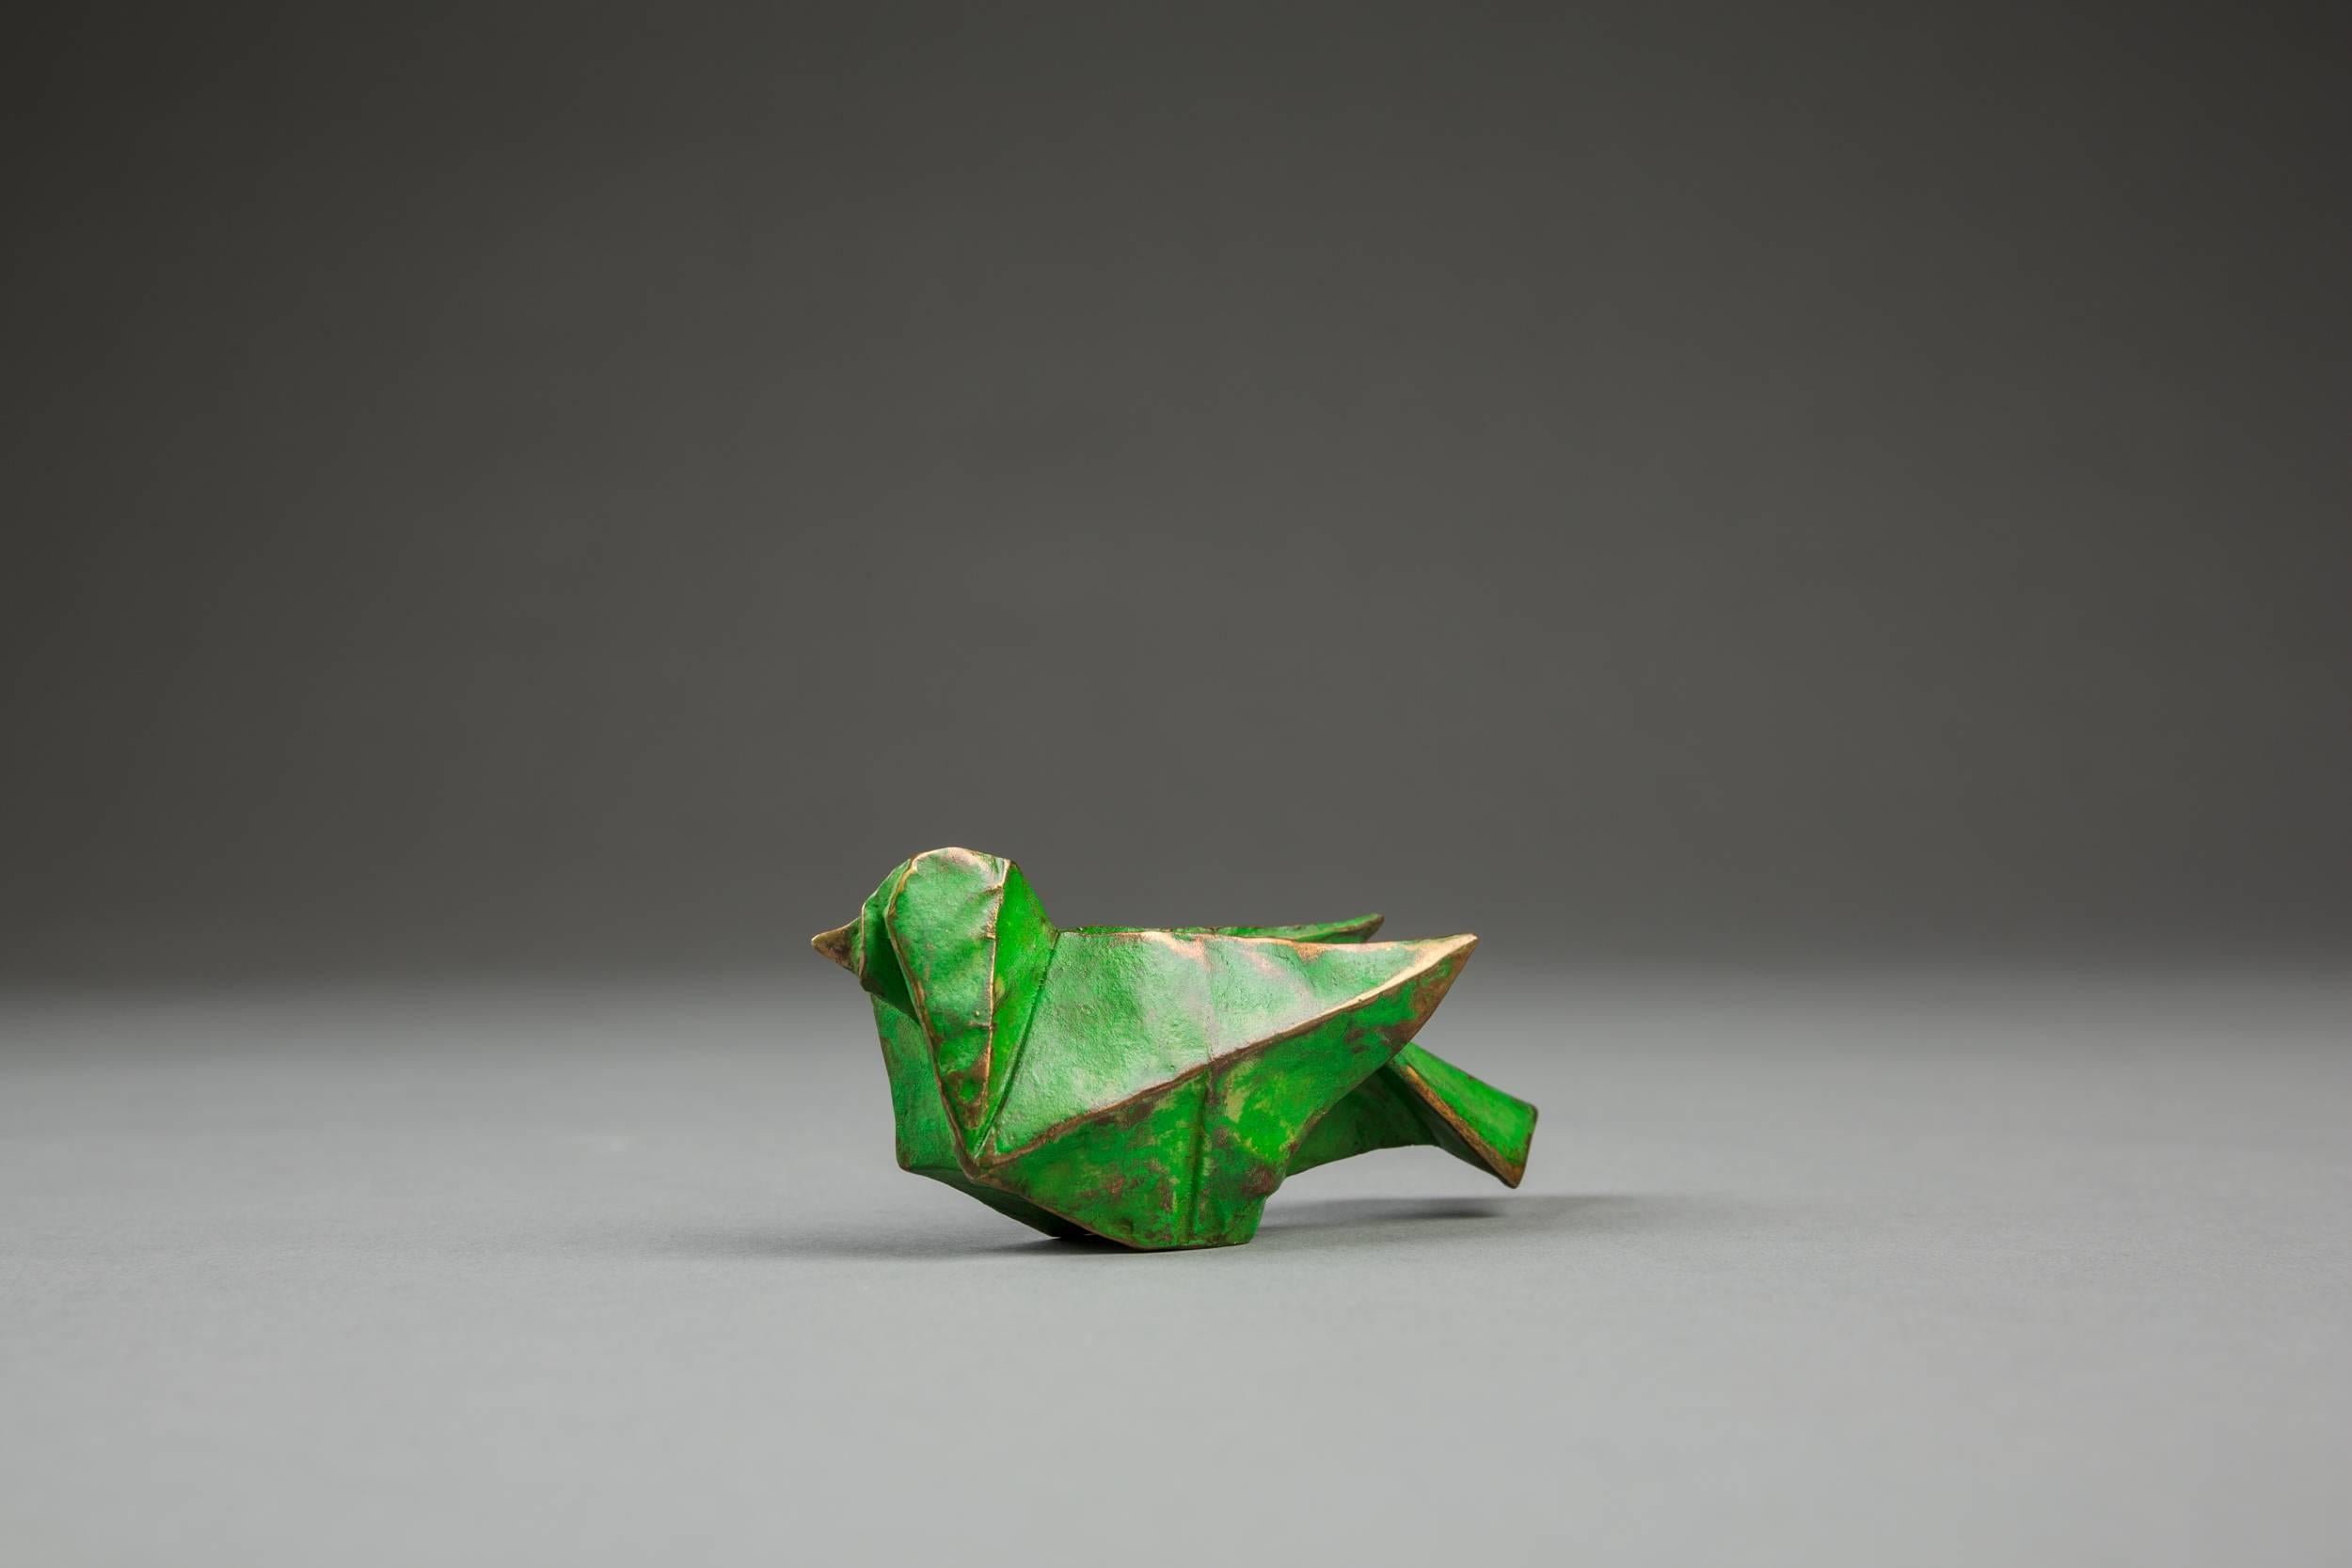 Kevin Box Figurative Sculpture - Bird in the Hand